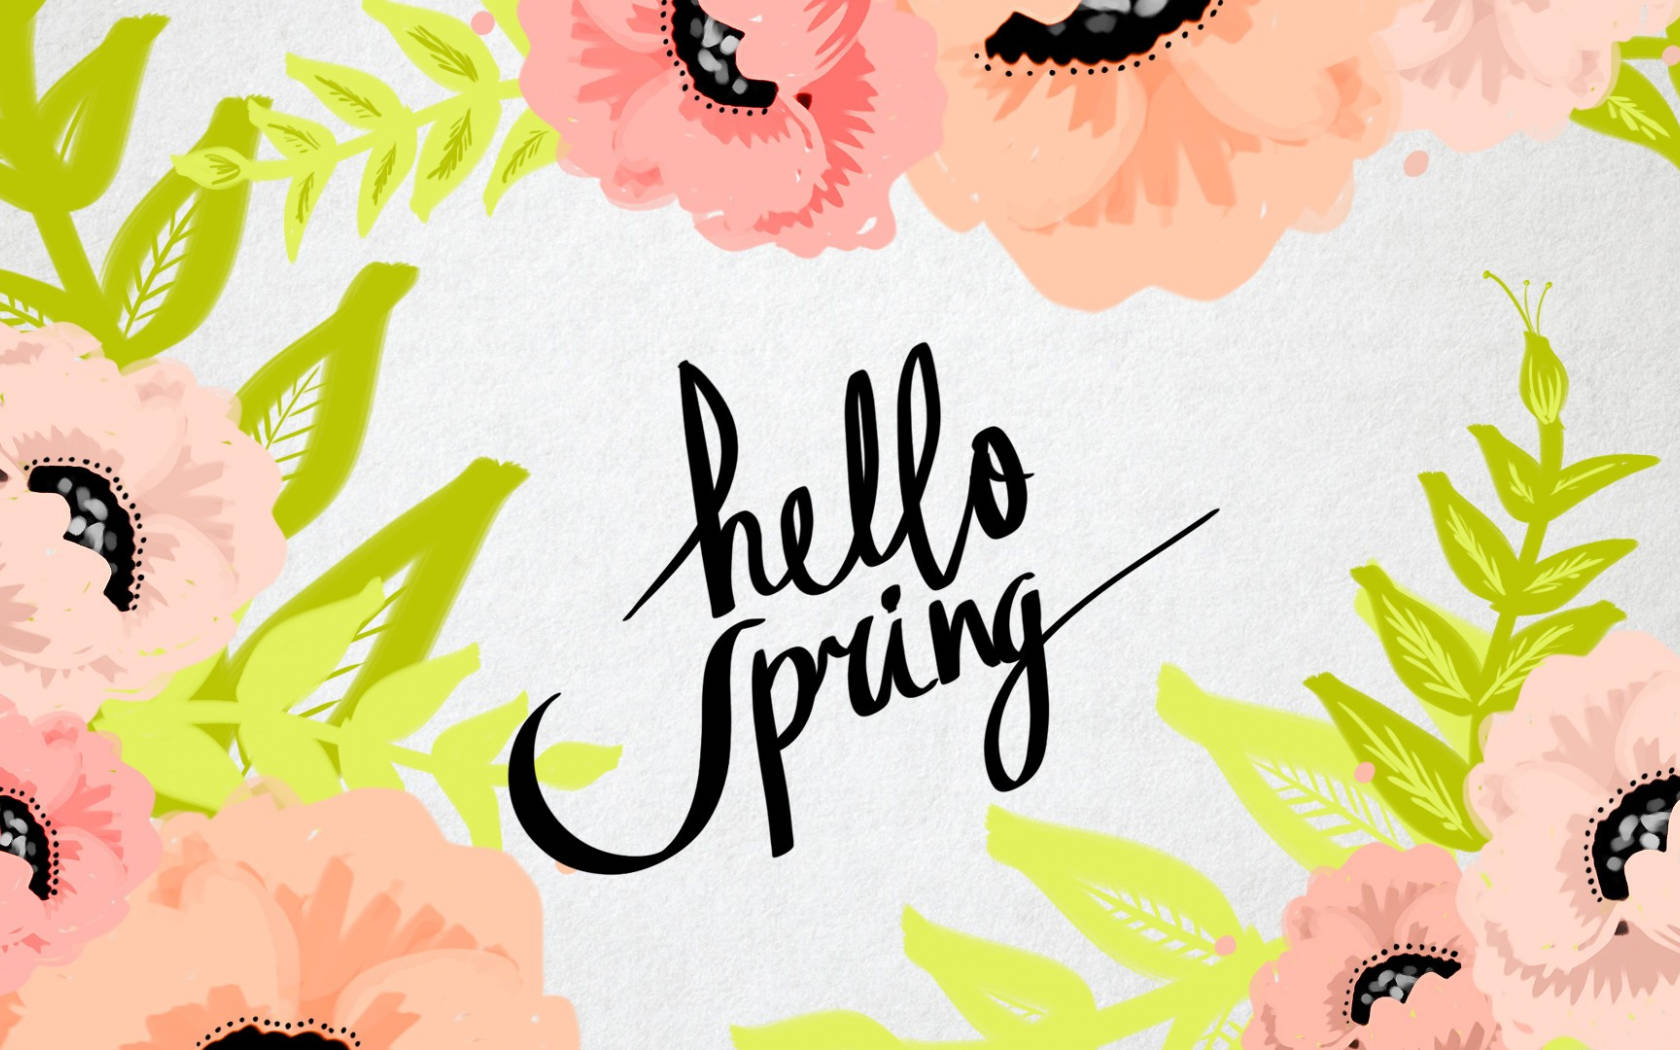 Hello Spring Flower Painting Wallpaper